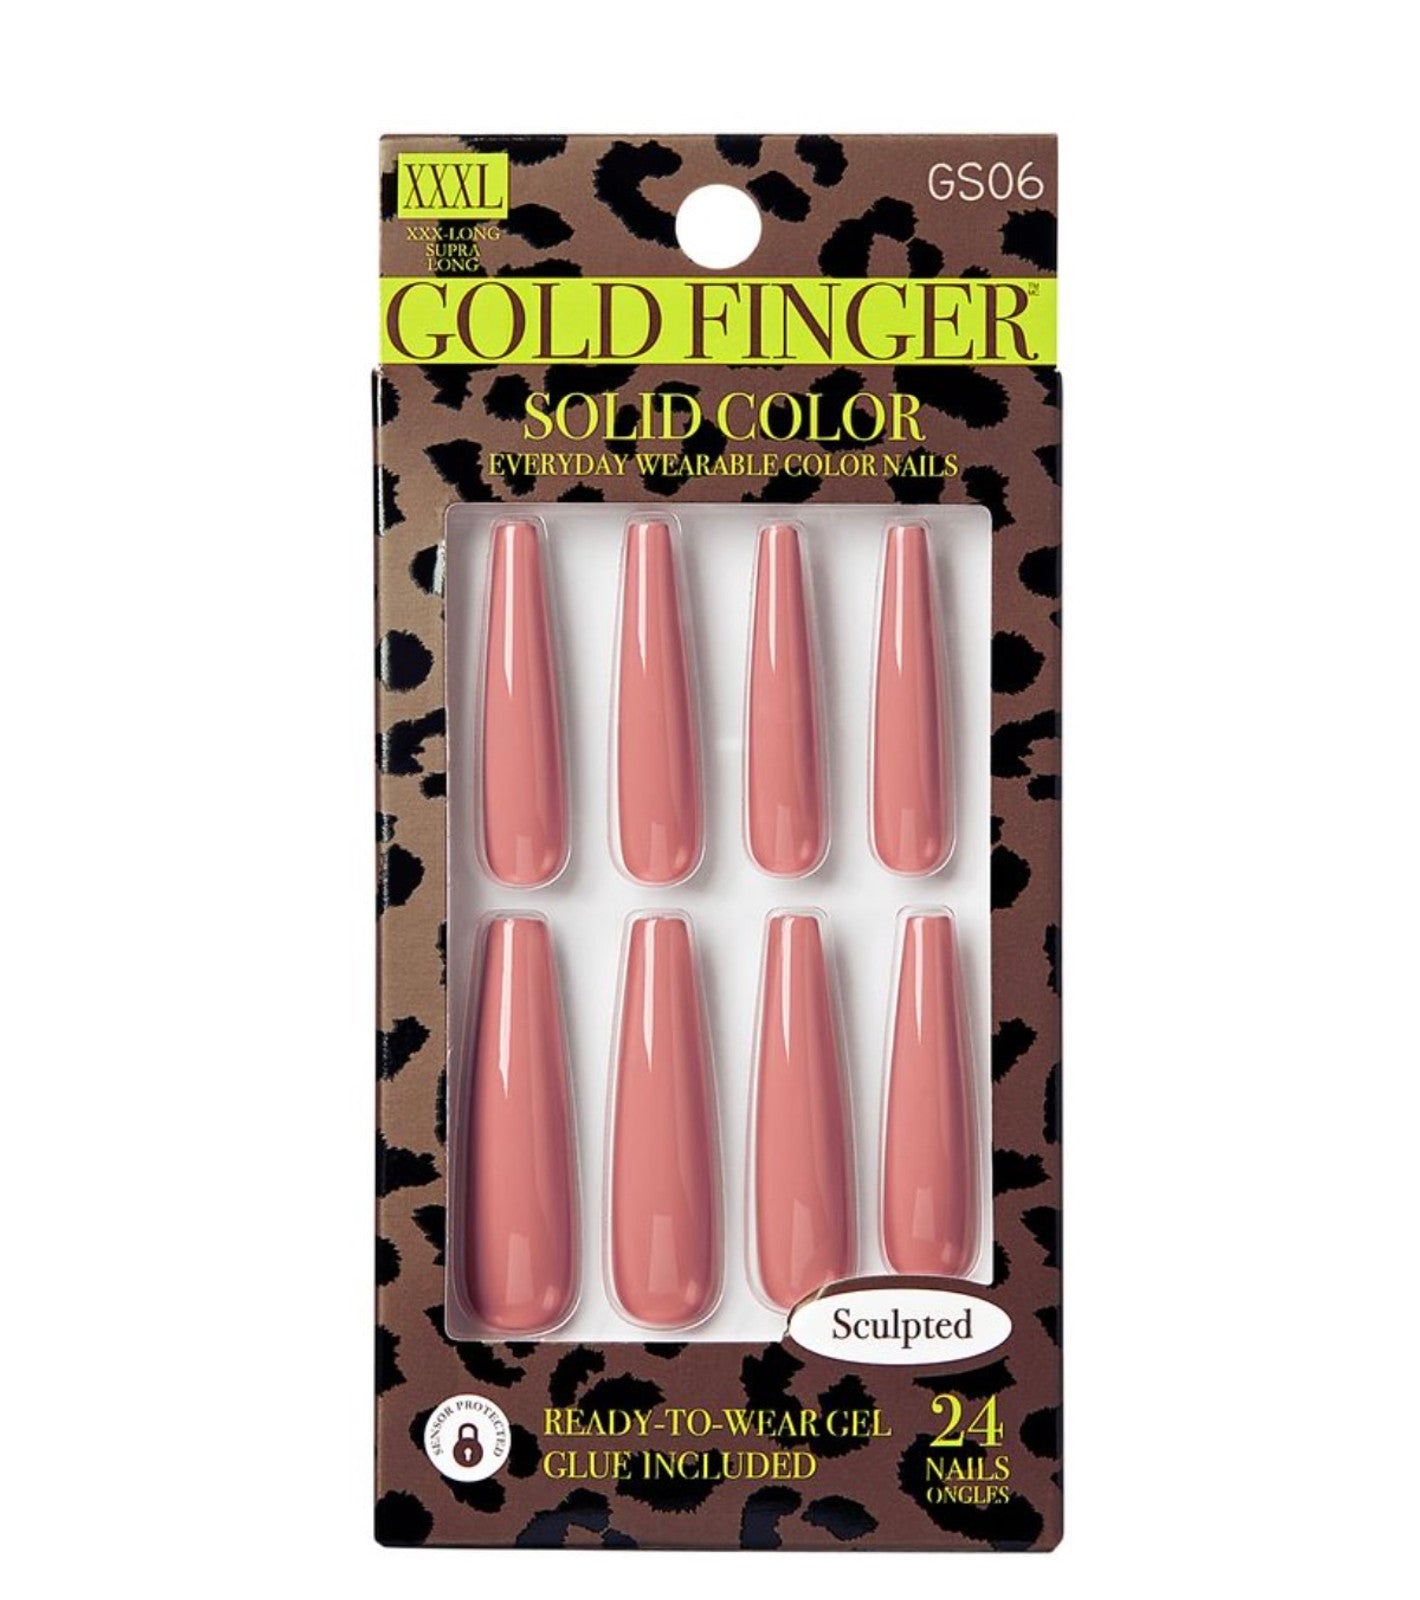 KISS Gold Finger Solid Color Nails